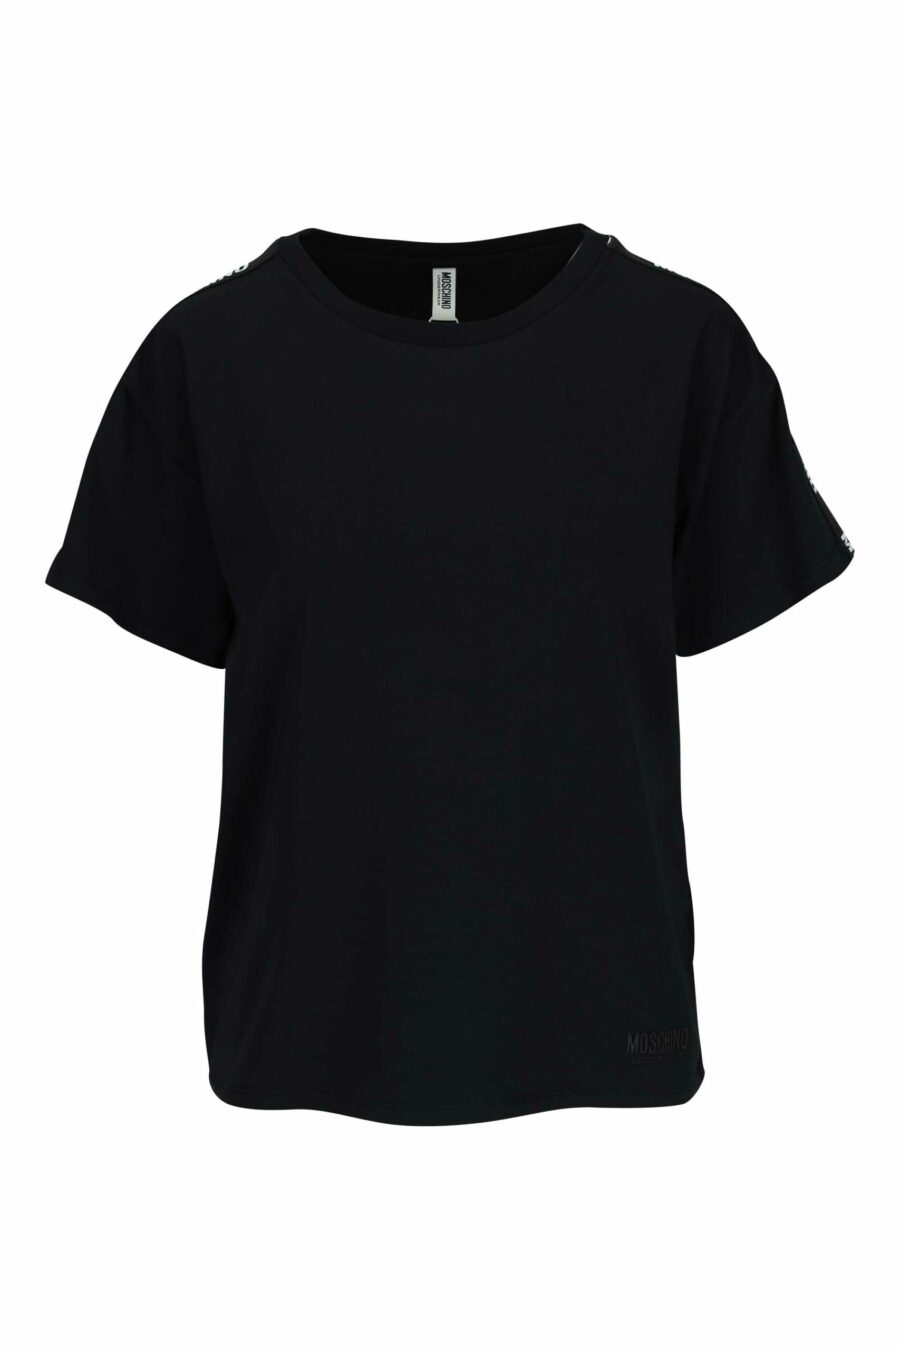 Black T-shirt with white shoulder band logo - 667113695549 scaled